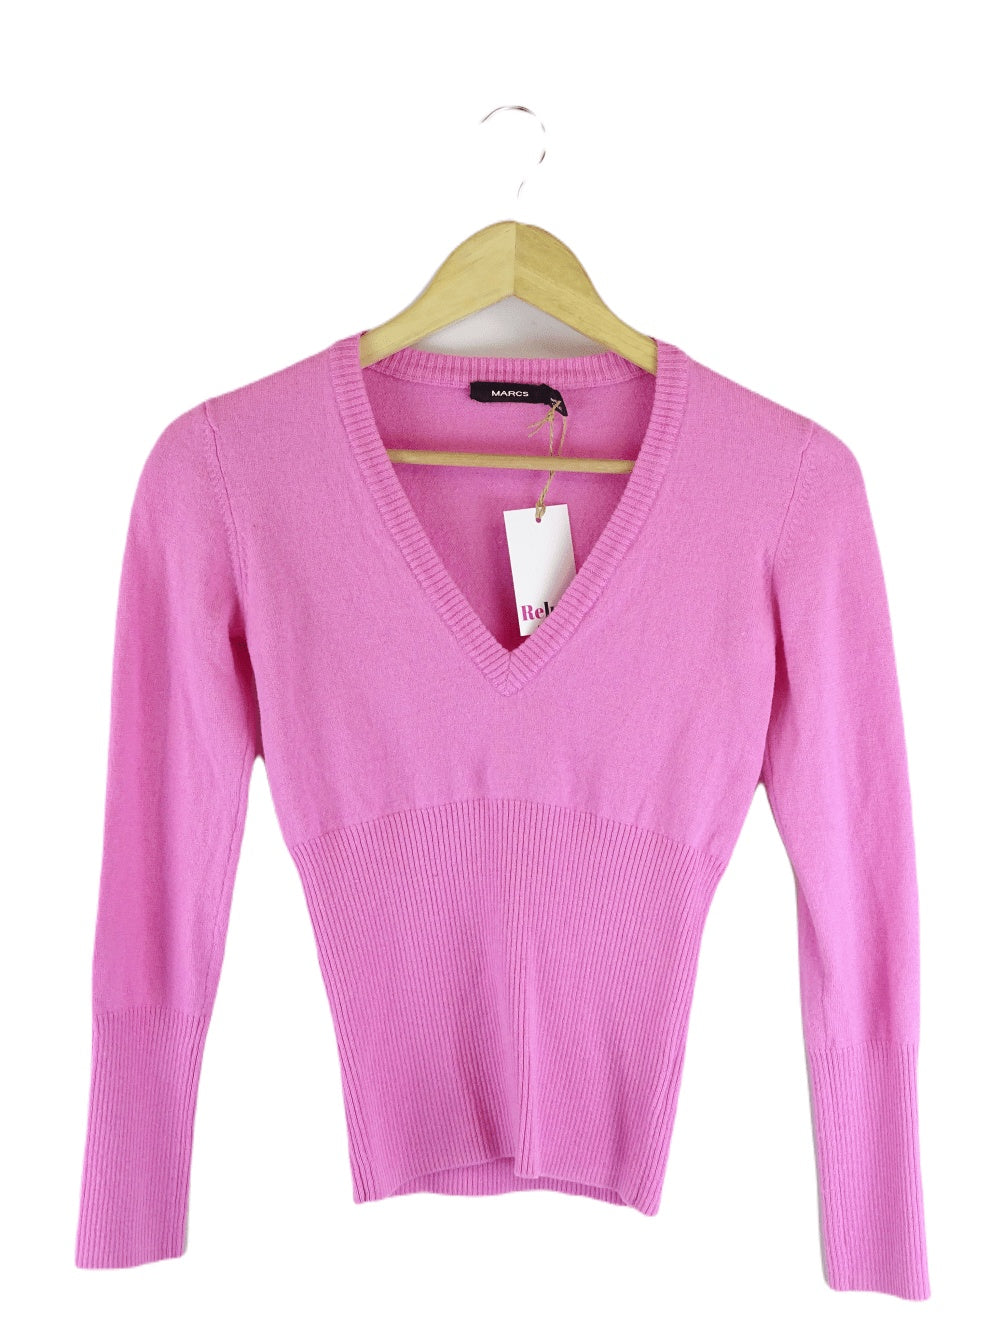 Marcs Pink V Neck Sweater M